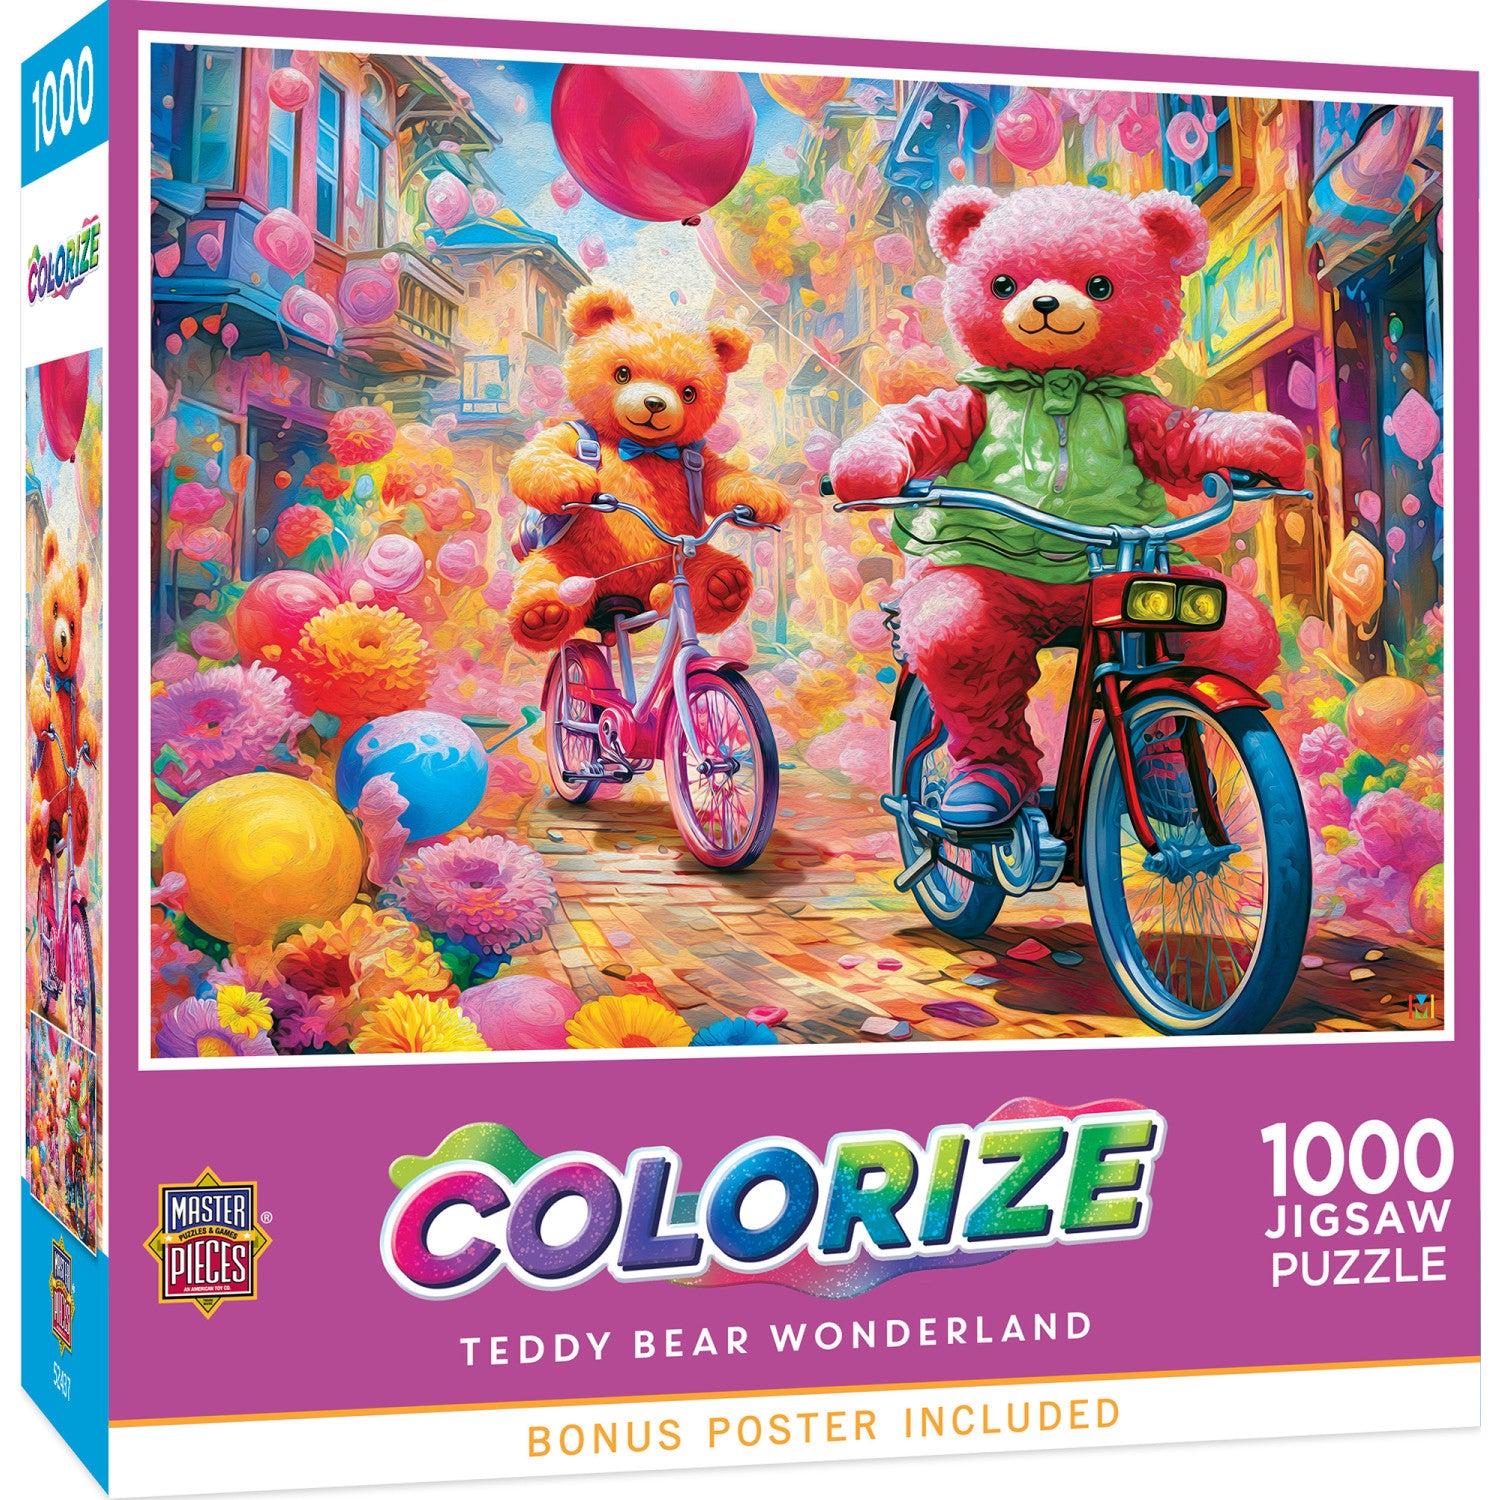 Colorize - Teddy Bear Wonderland 1000 Piece Jigsaw Puzzle